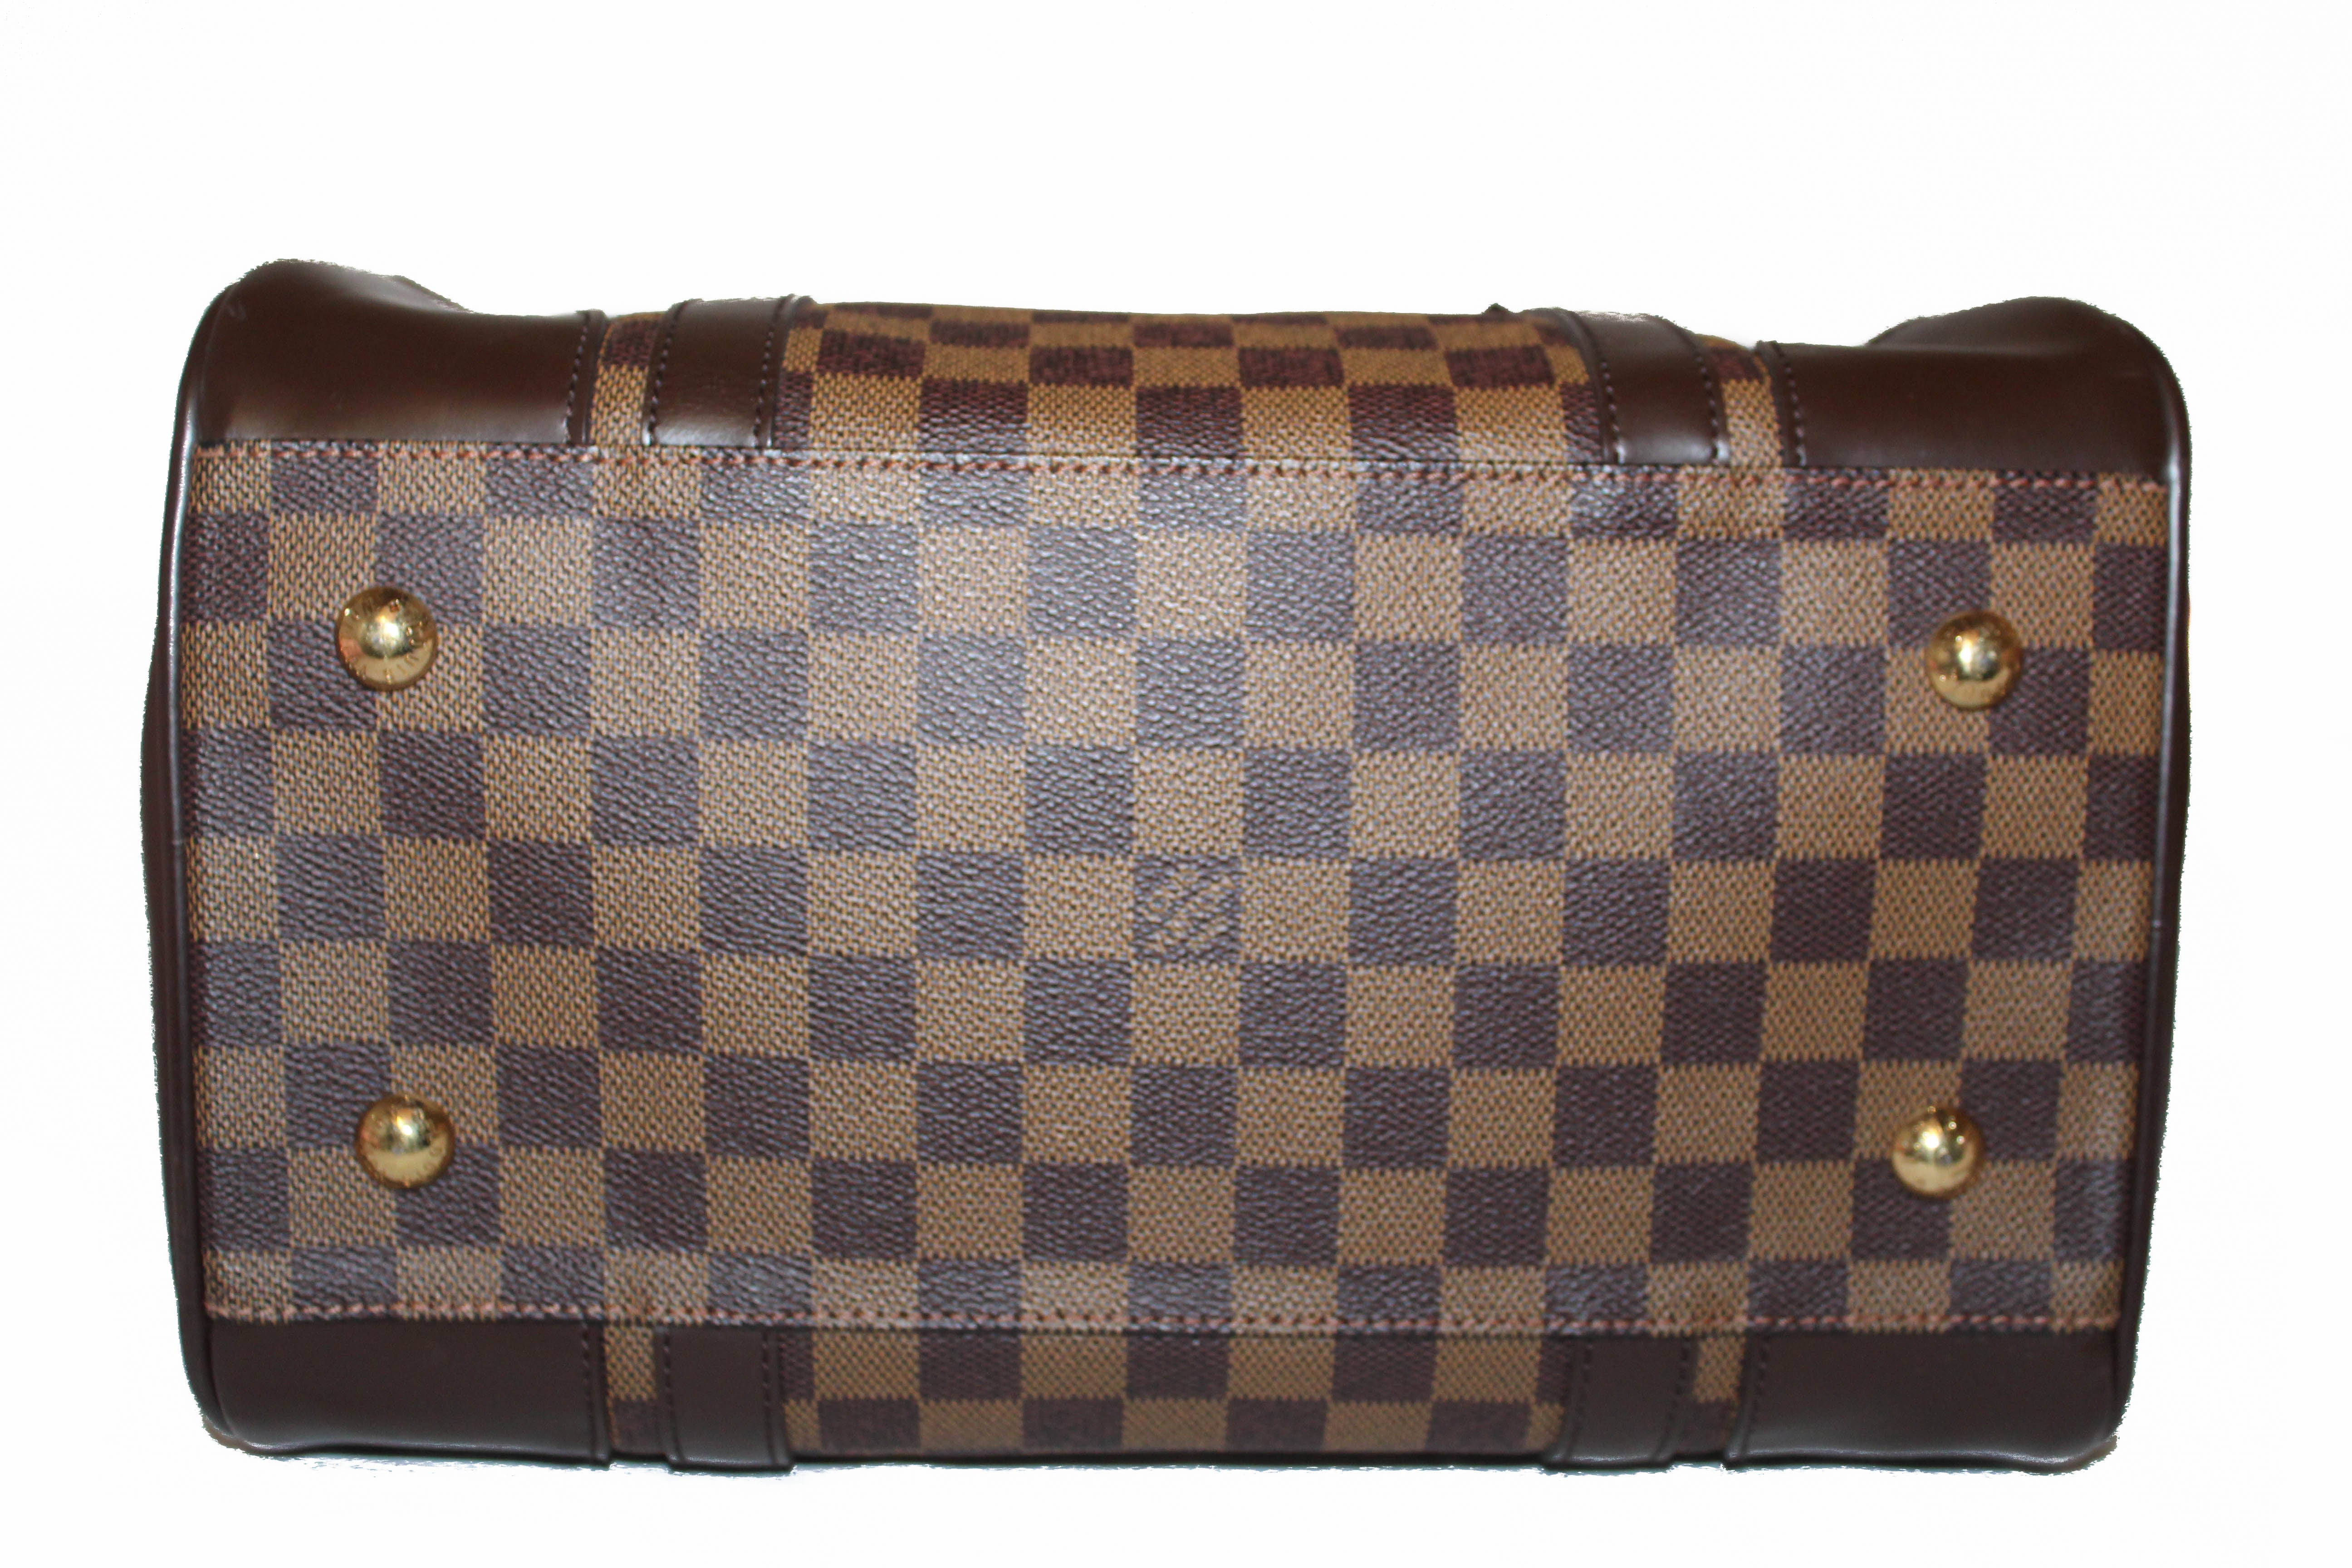 Berkeley leather handbag Louis Vuitton Beige in Leather - 35201392